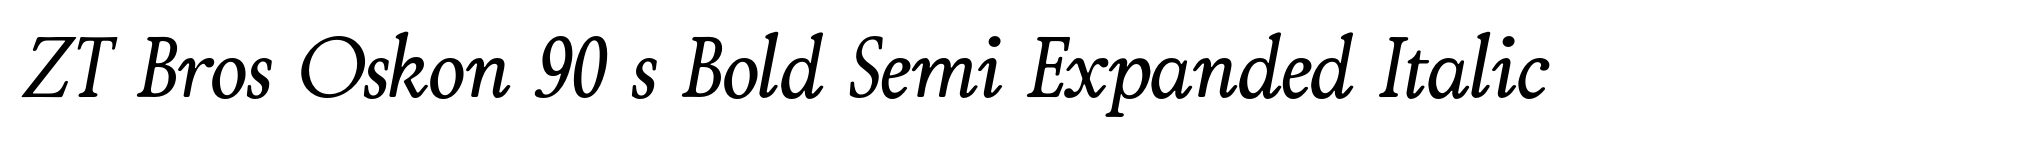 ZT Bros Oskon 90 s Bold Semi Expanded Italic image